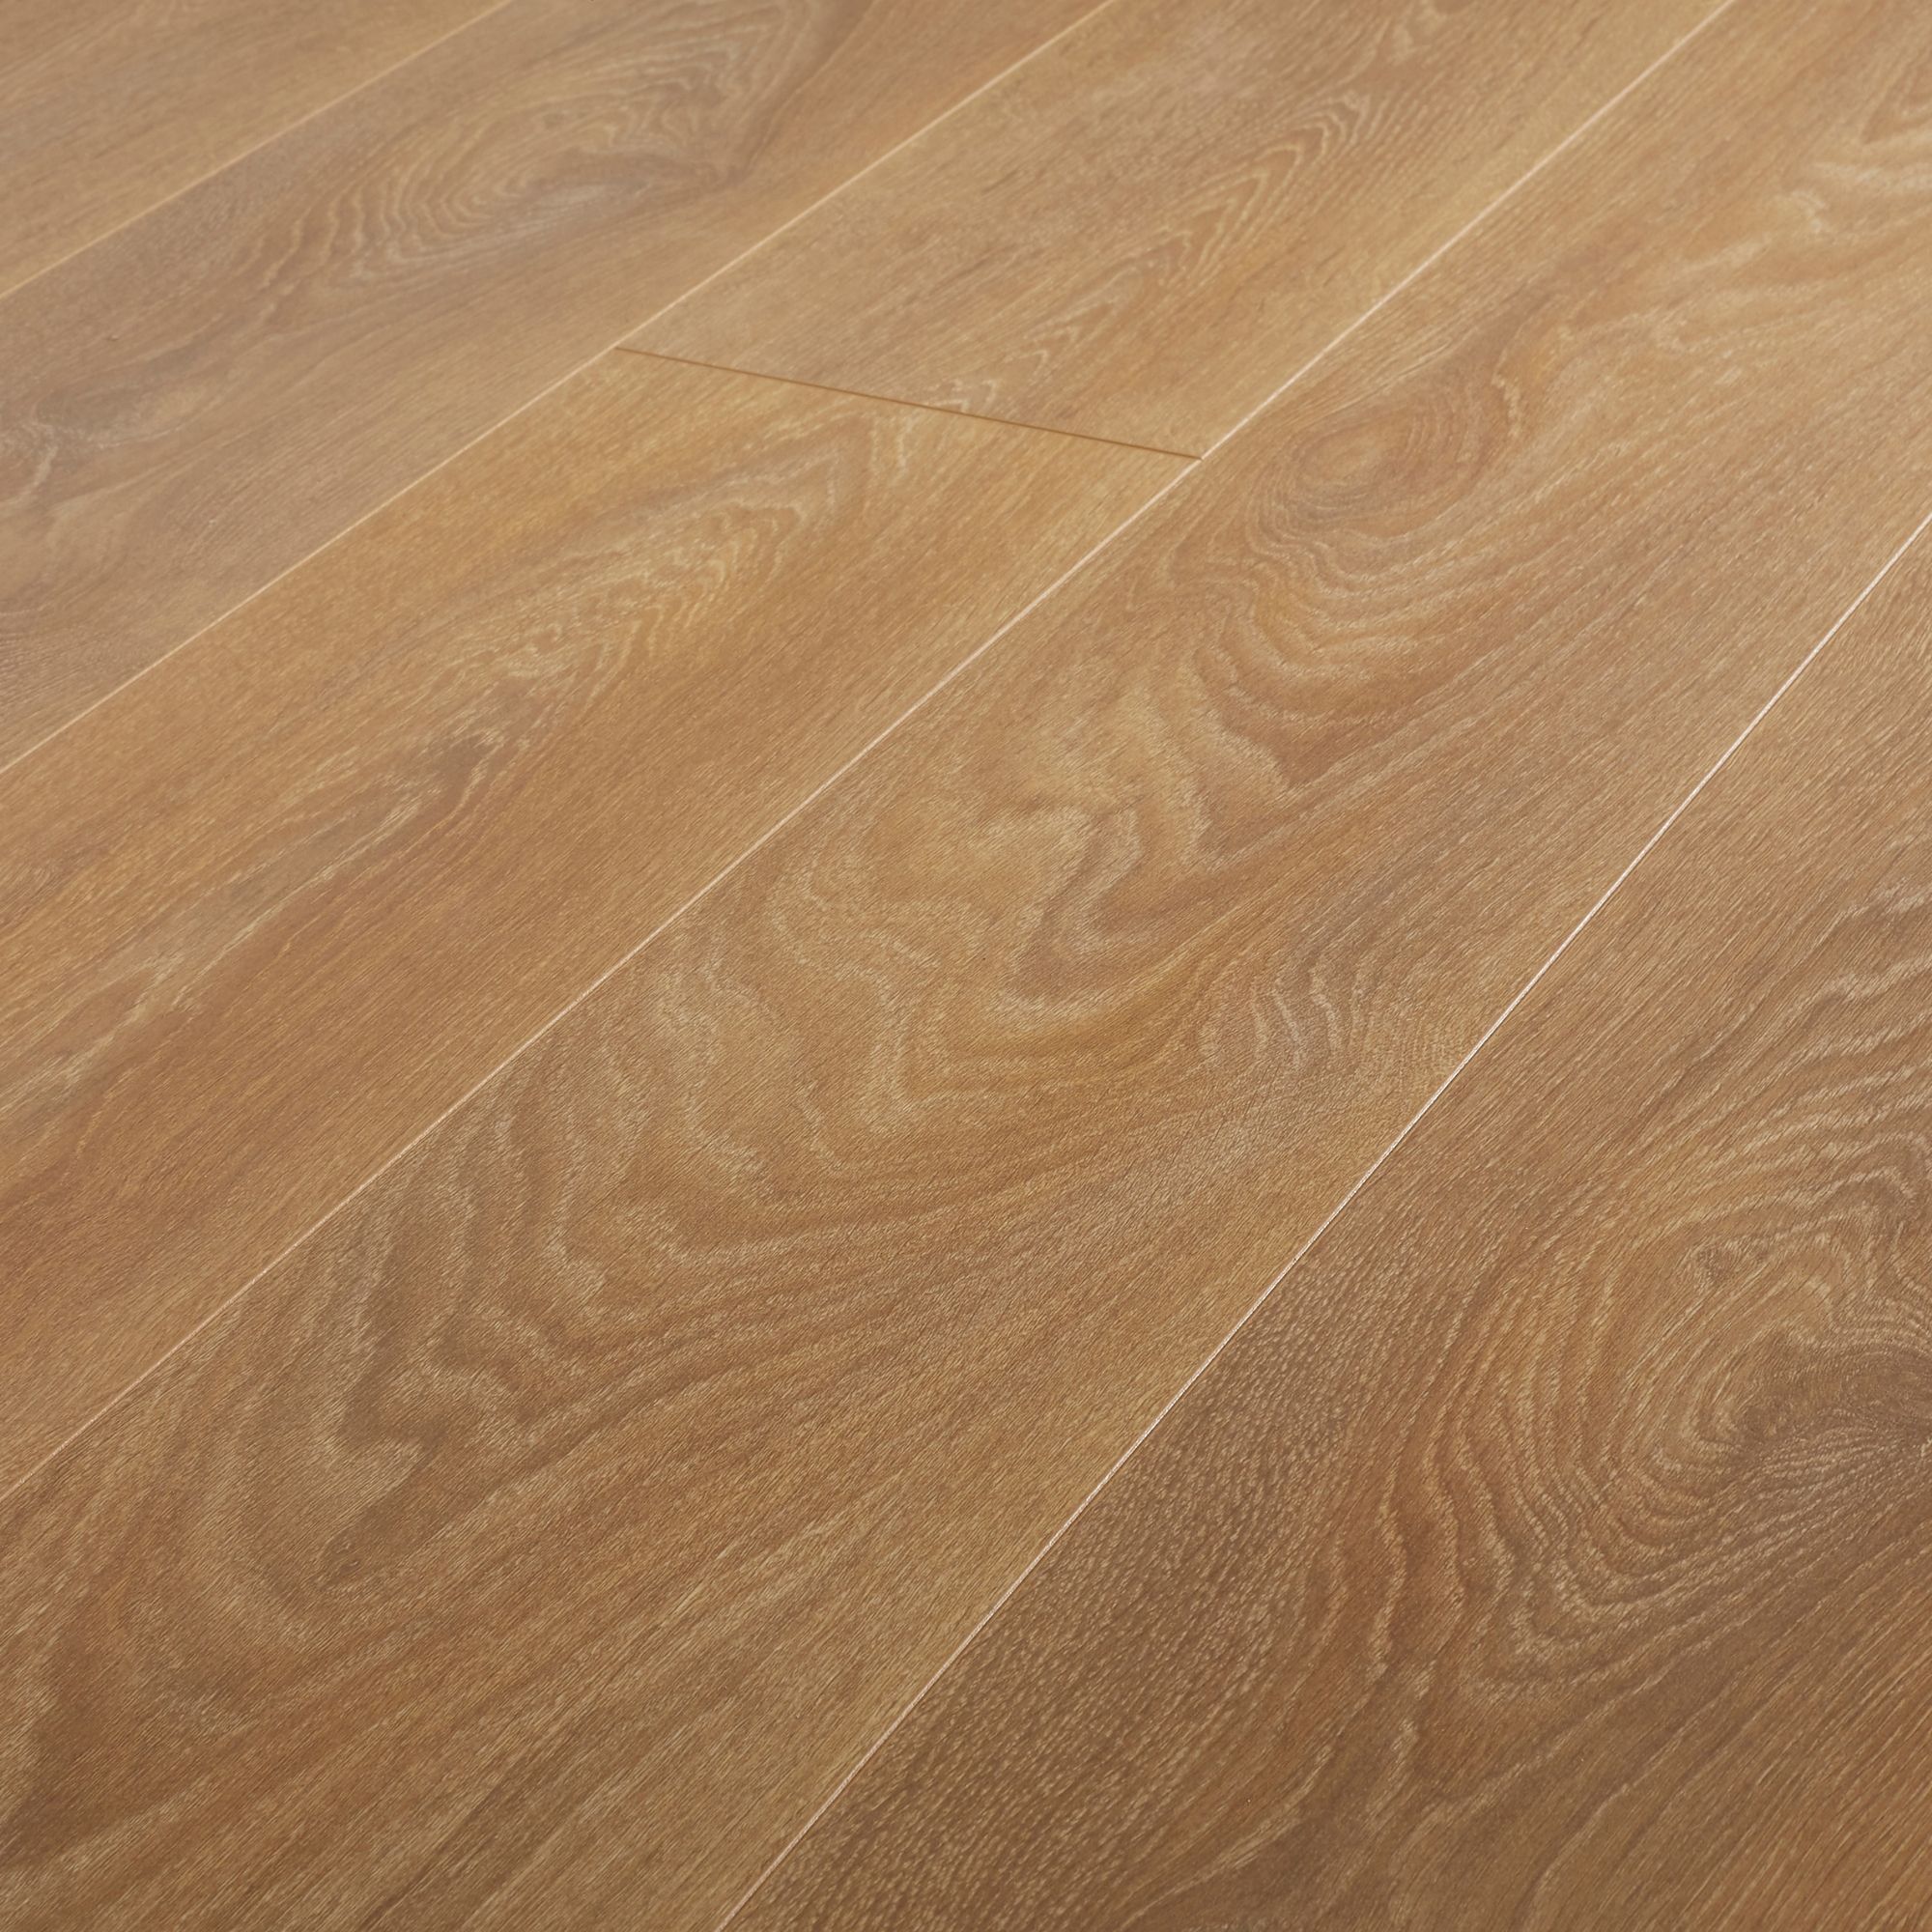 GoodHome Mossley Brown Natural oak effect Laminate Flooring, 1.73m²